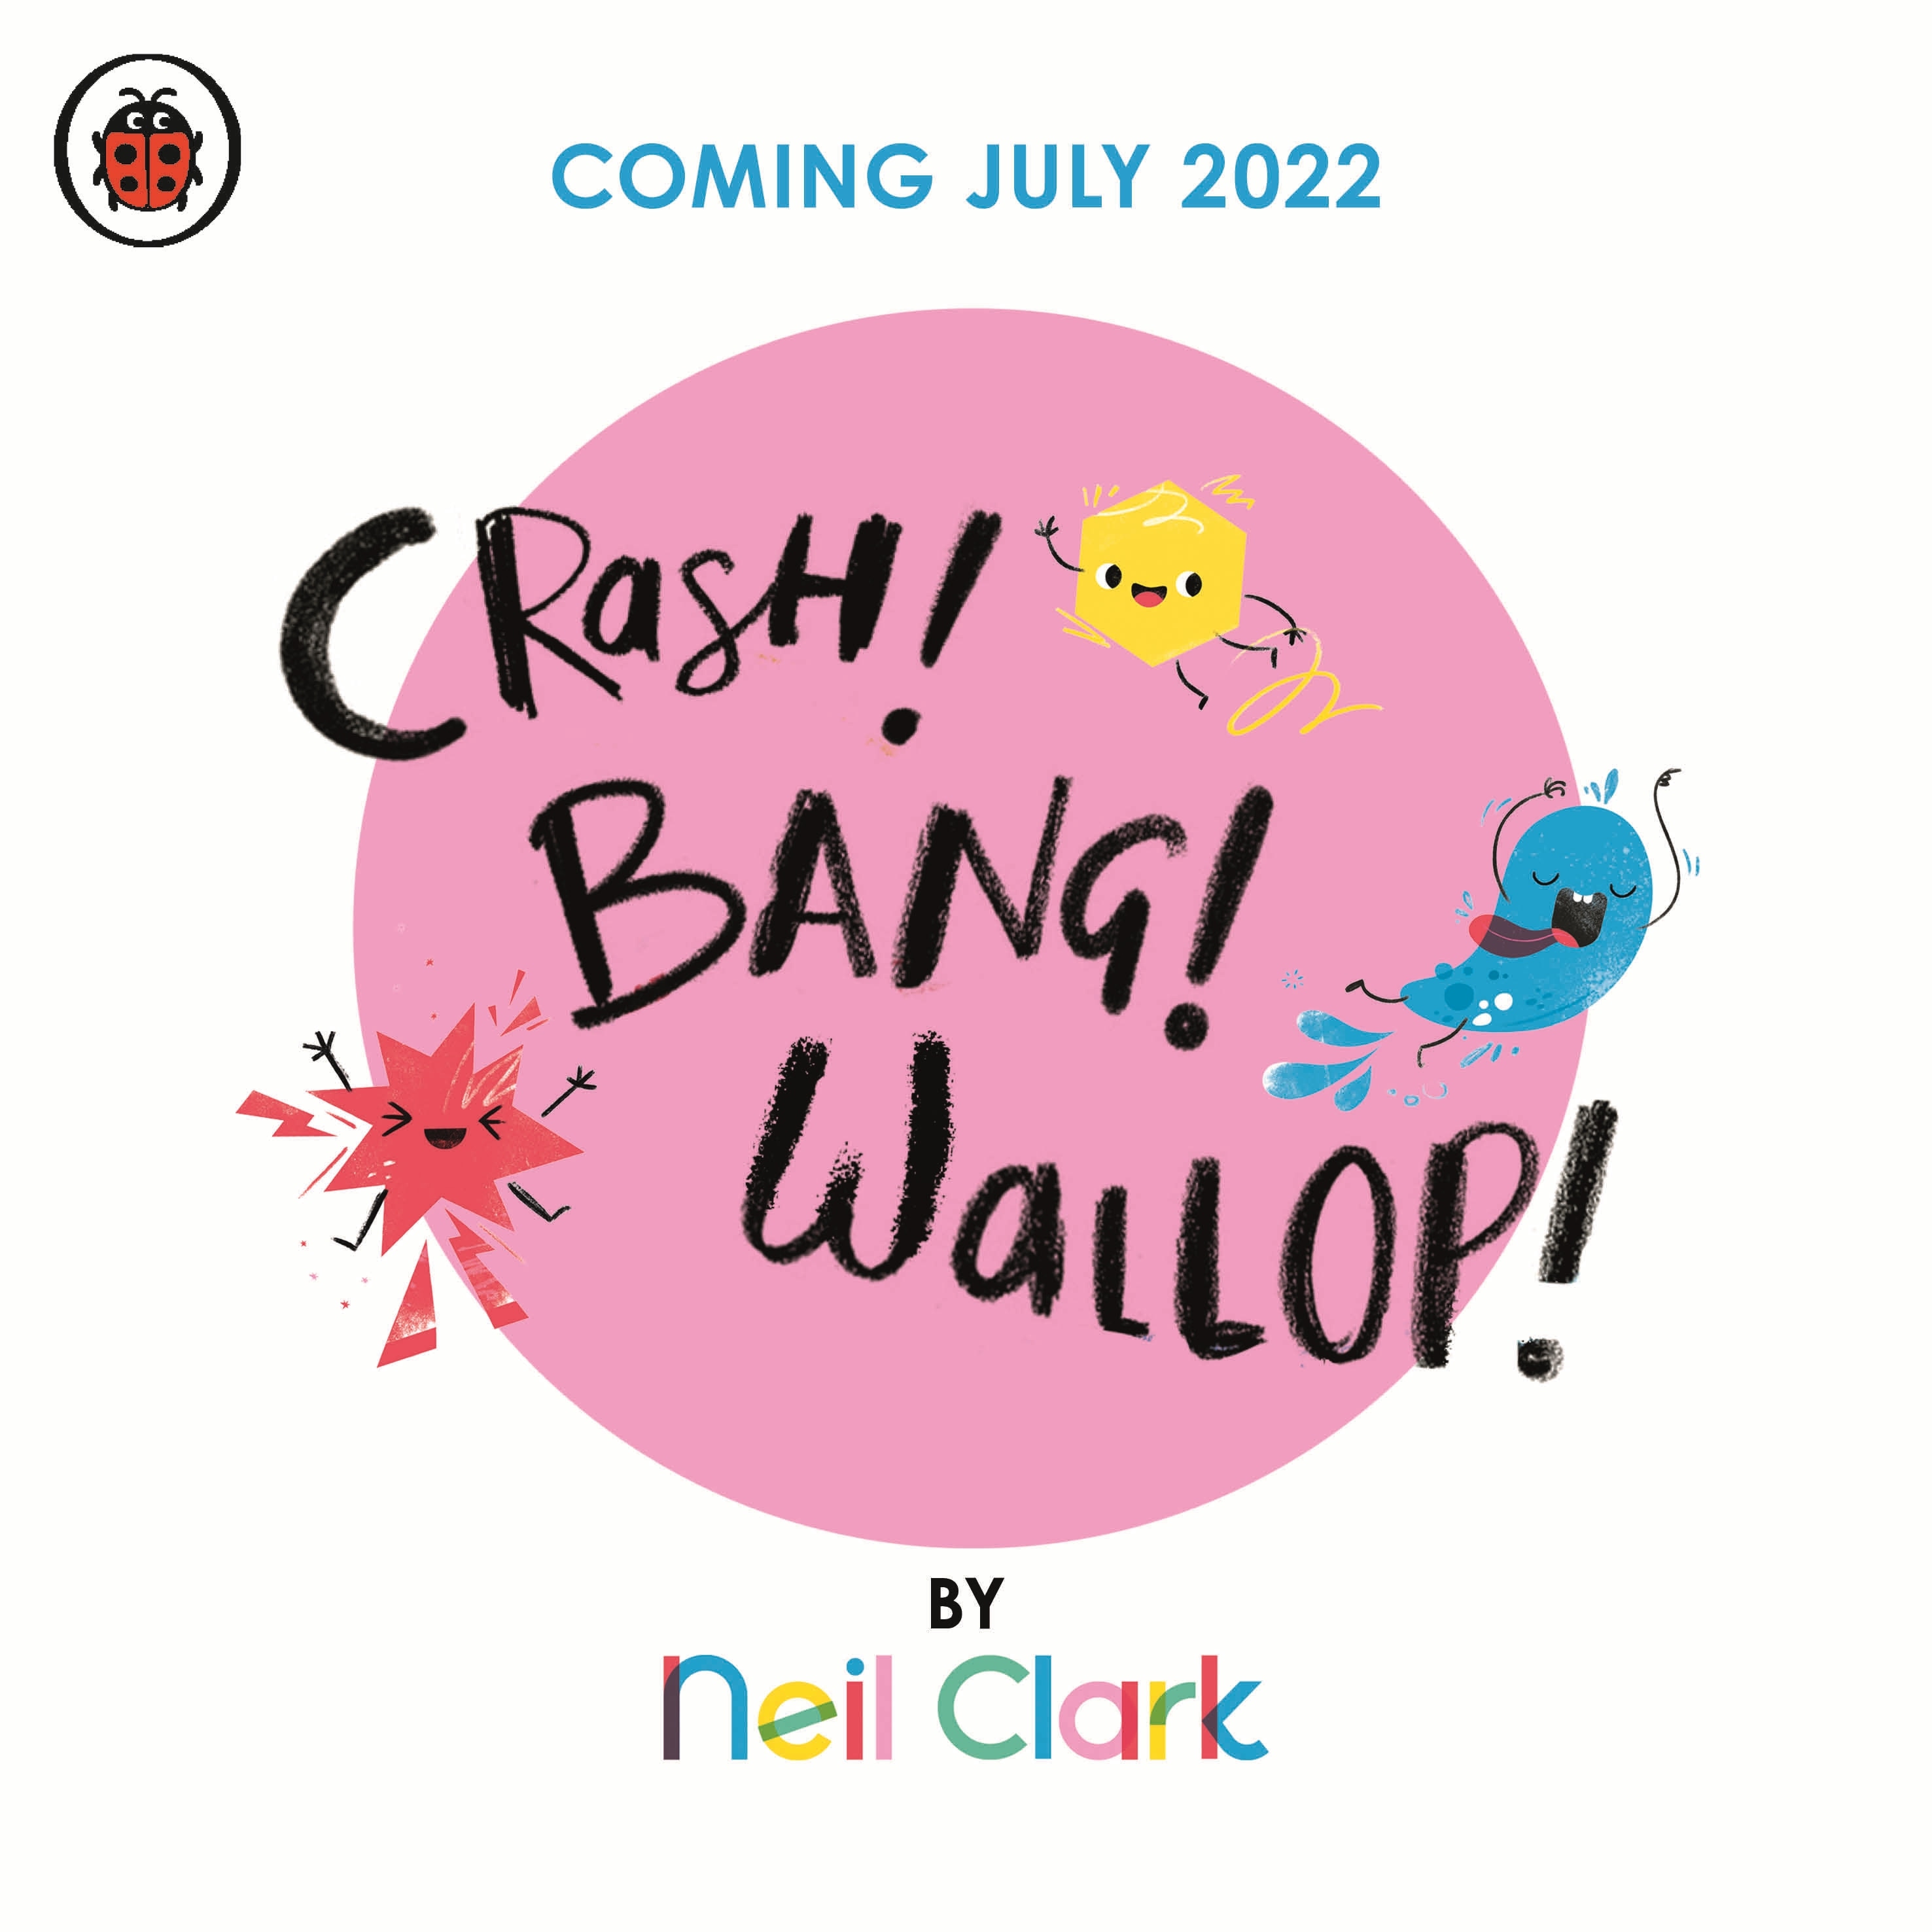 Book “Crash! Bang! Wallop!” by Neil Clark — July 21, 2022